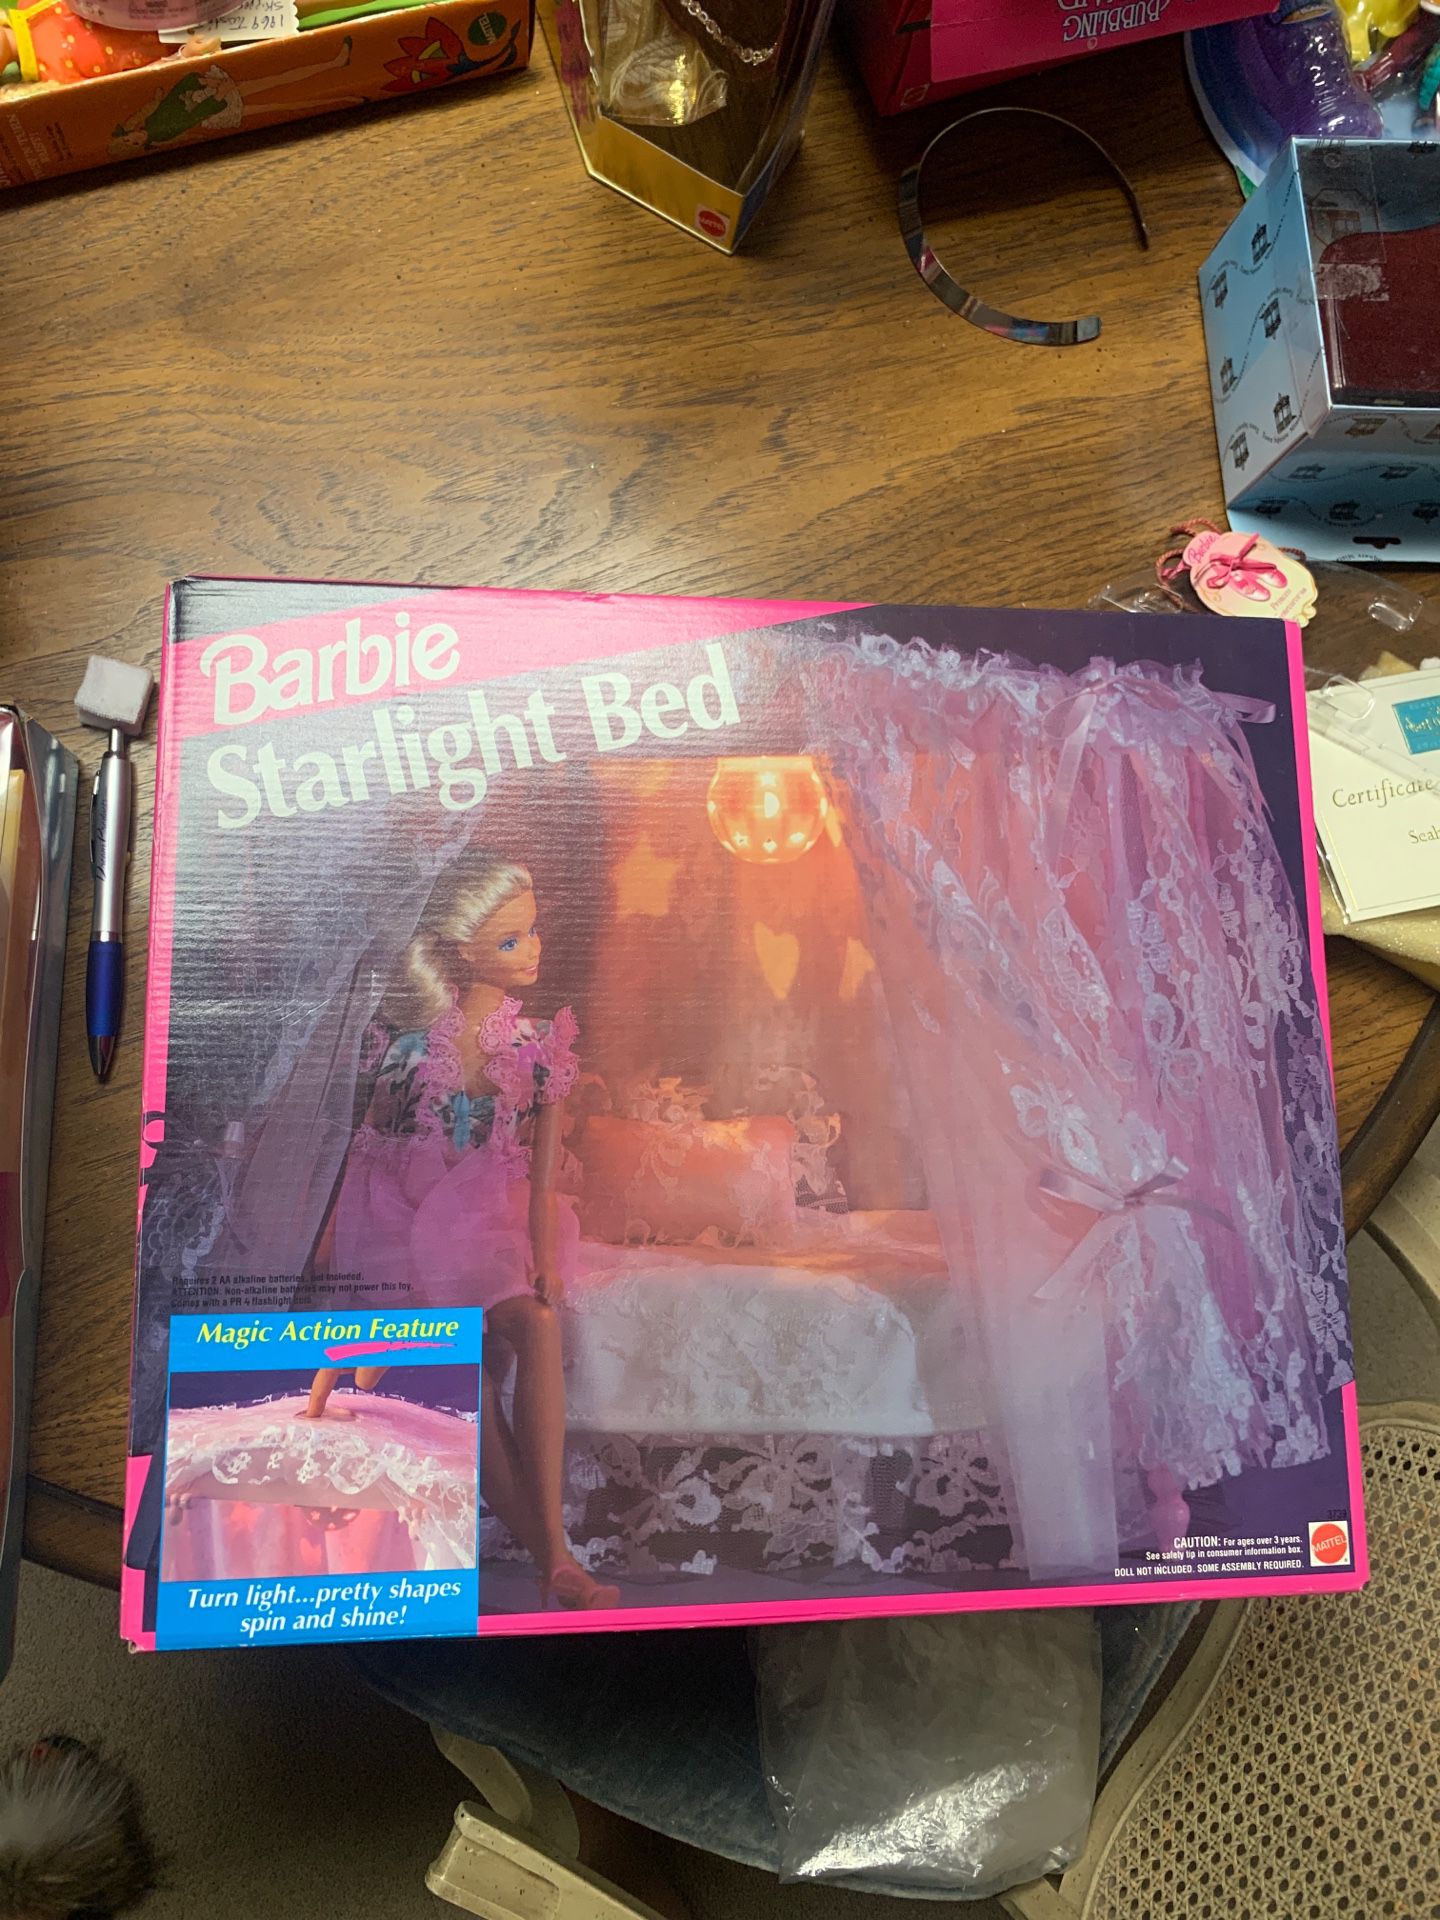 Barbie starlight bed